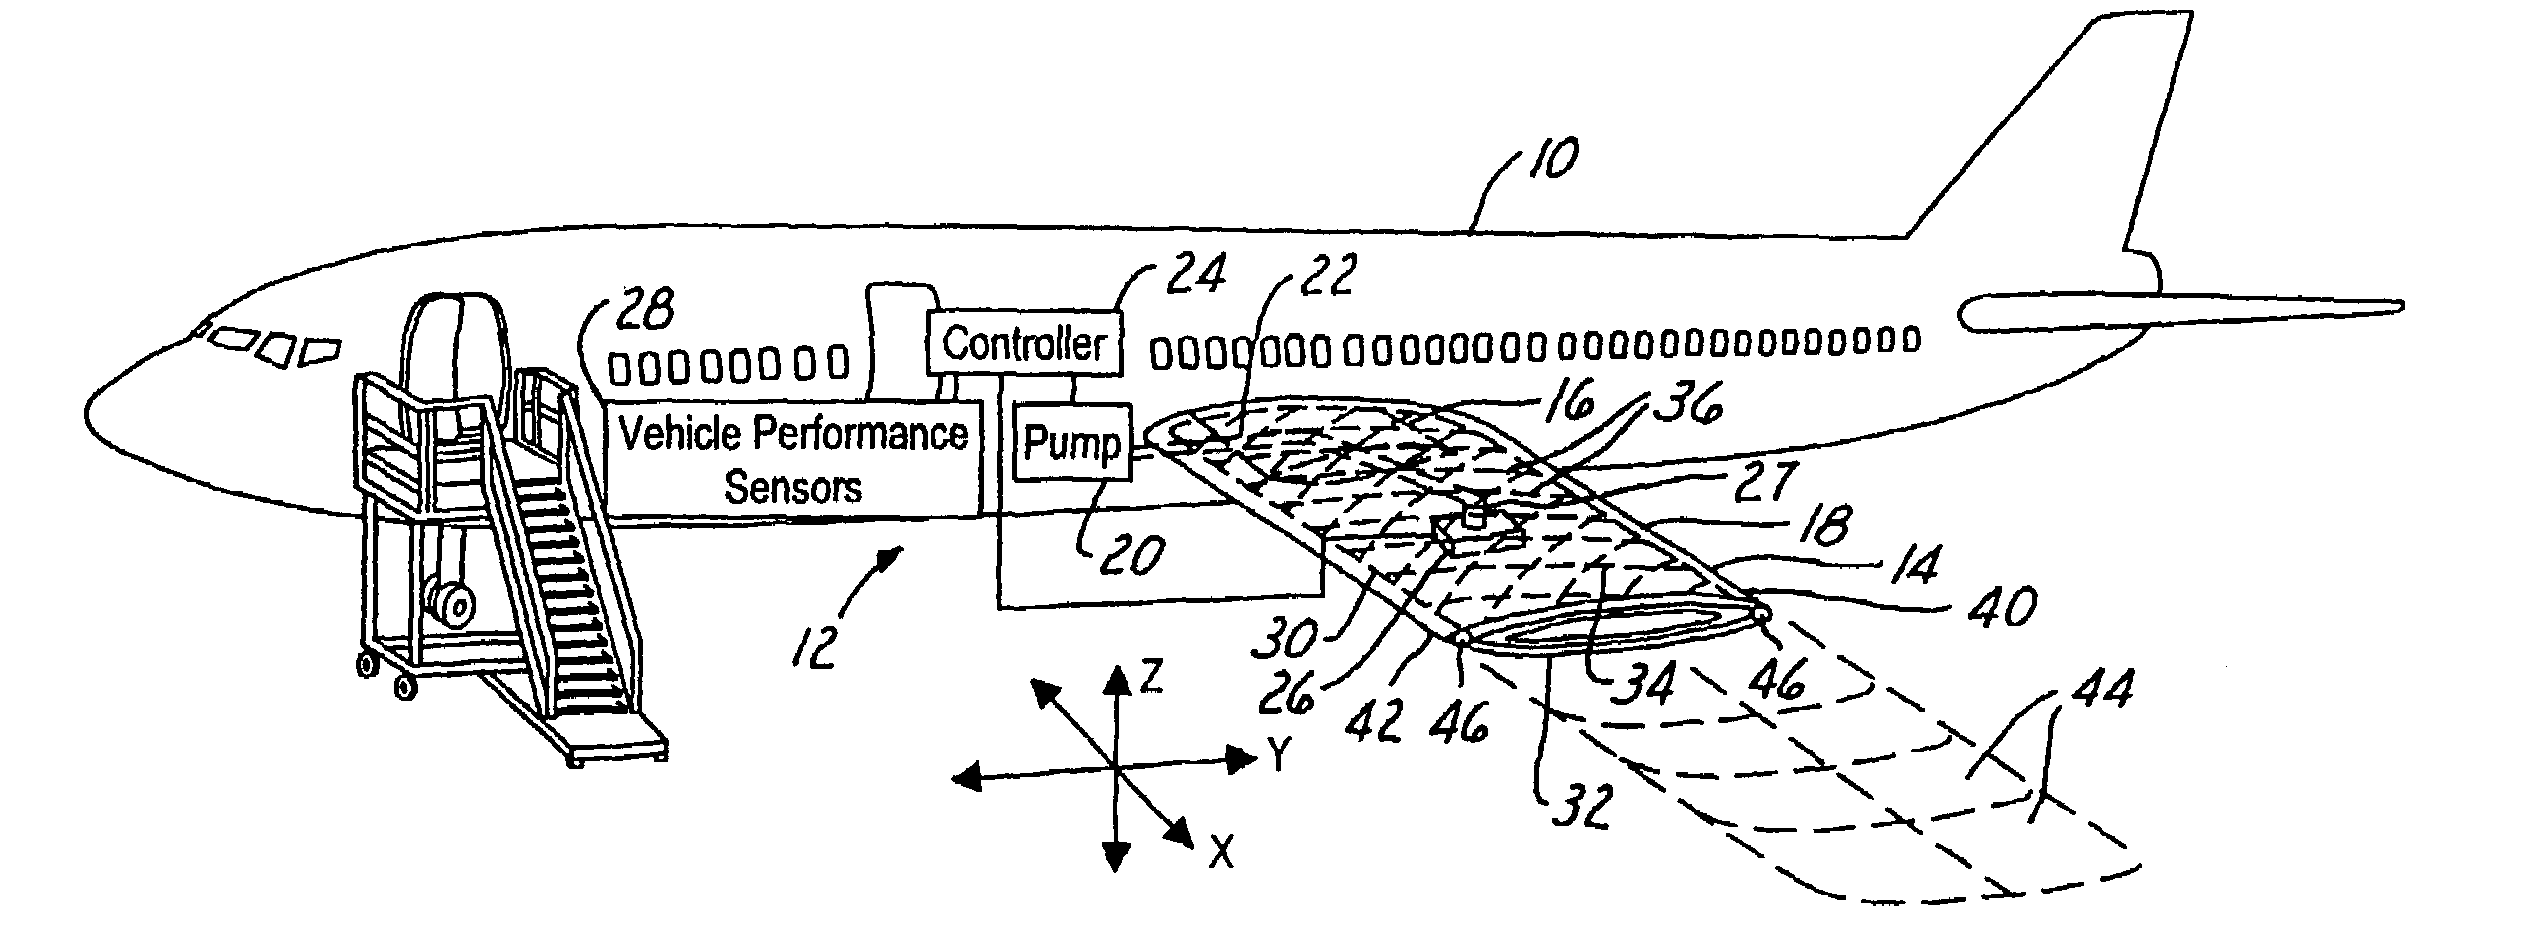 Fiber matrix for a geometric morphing wing